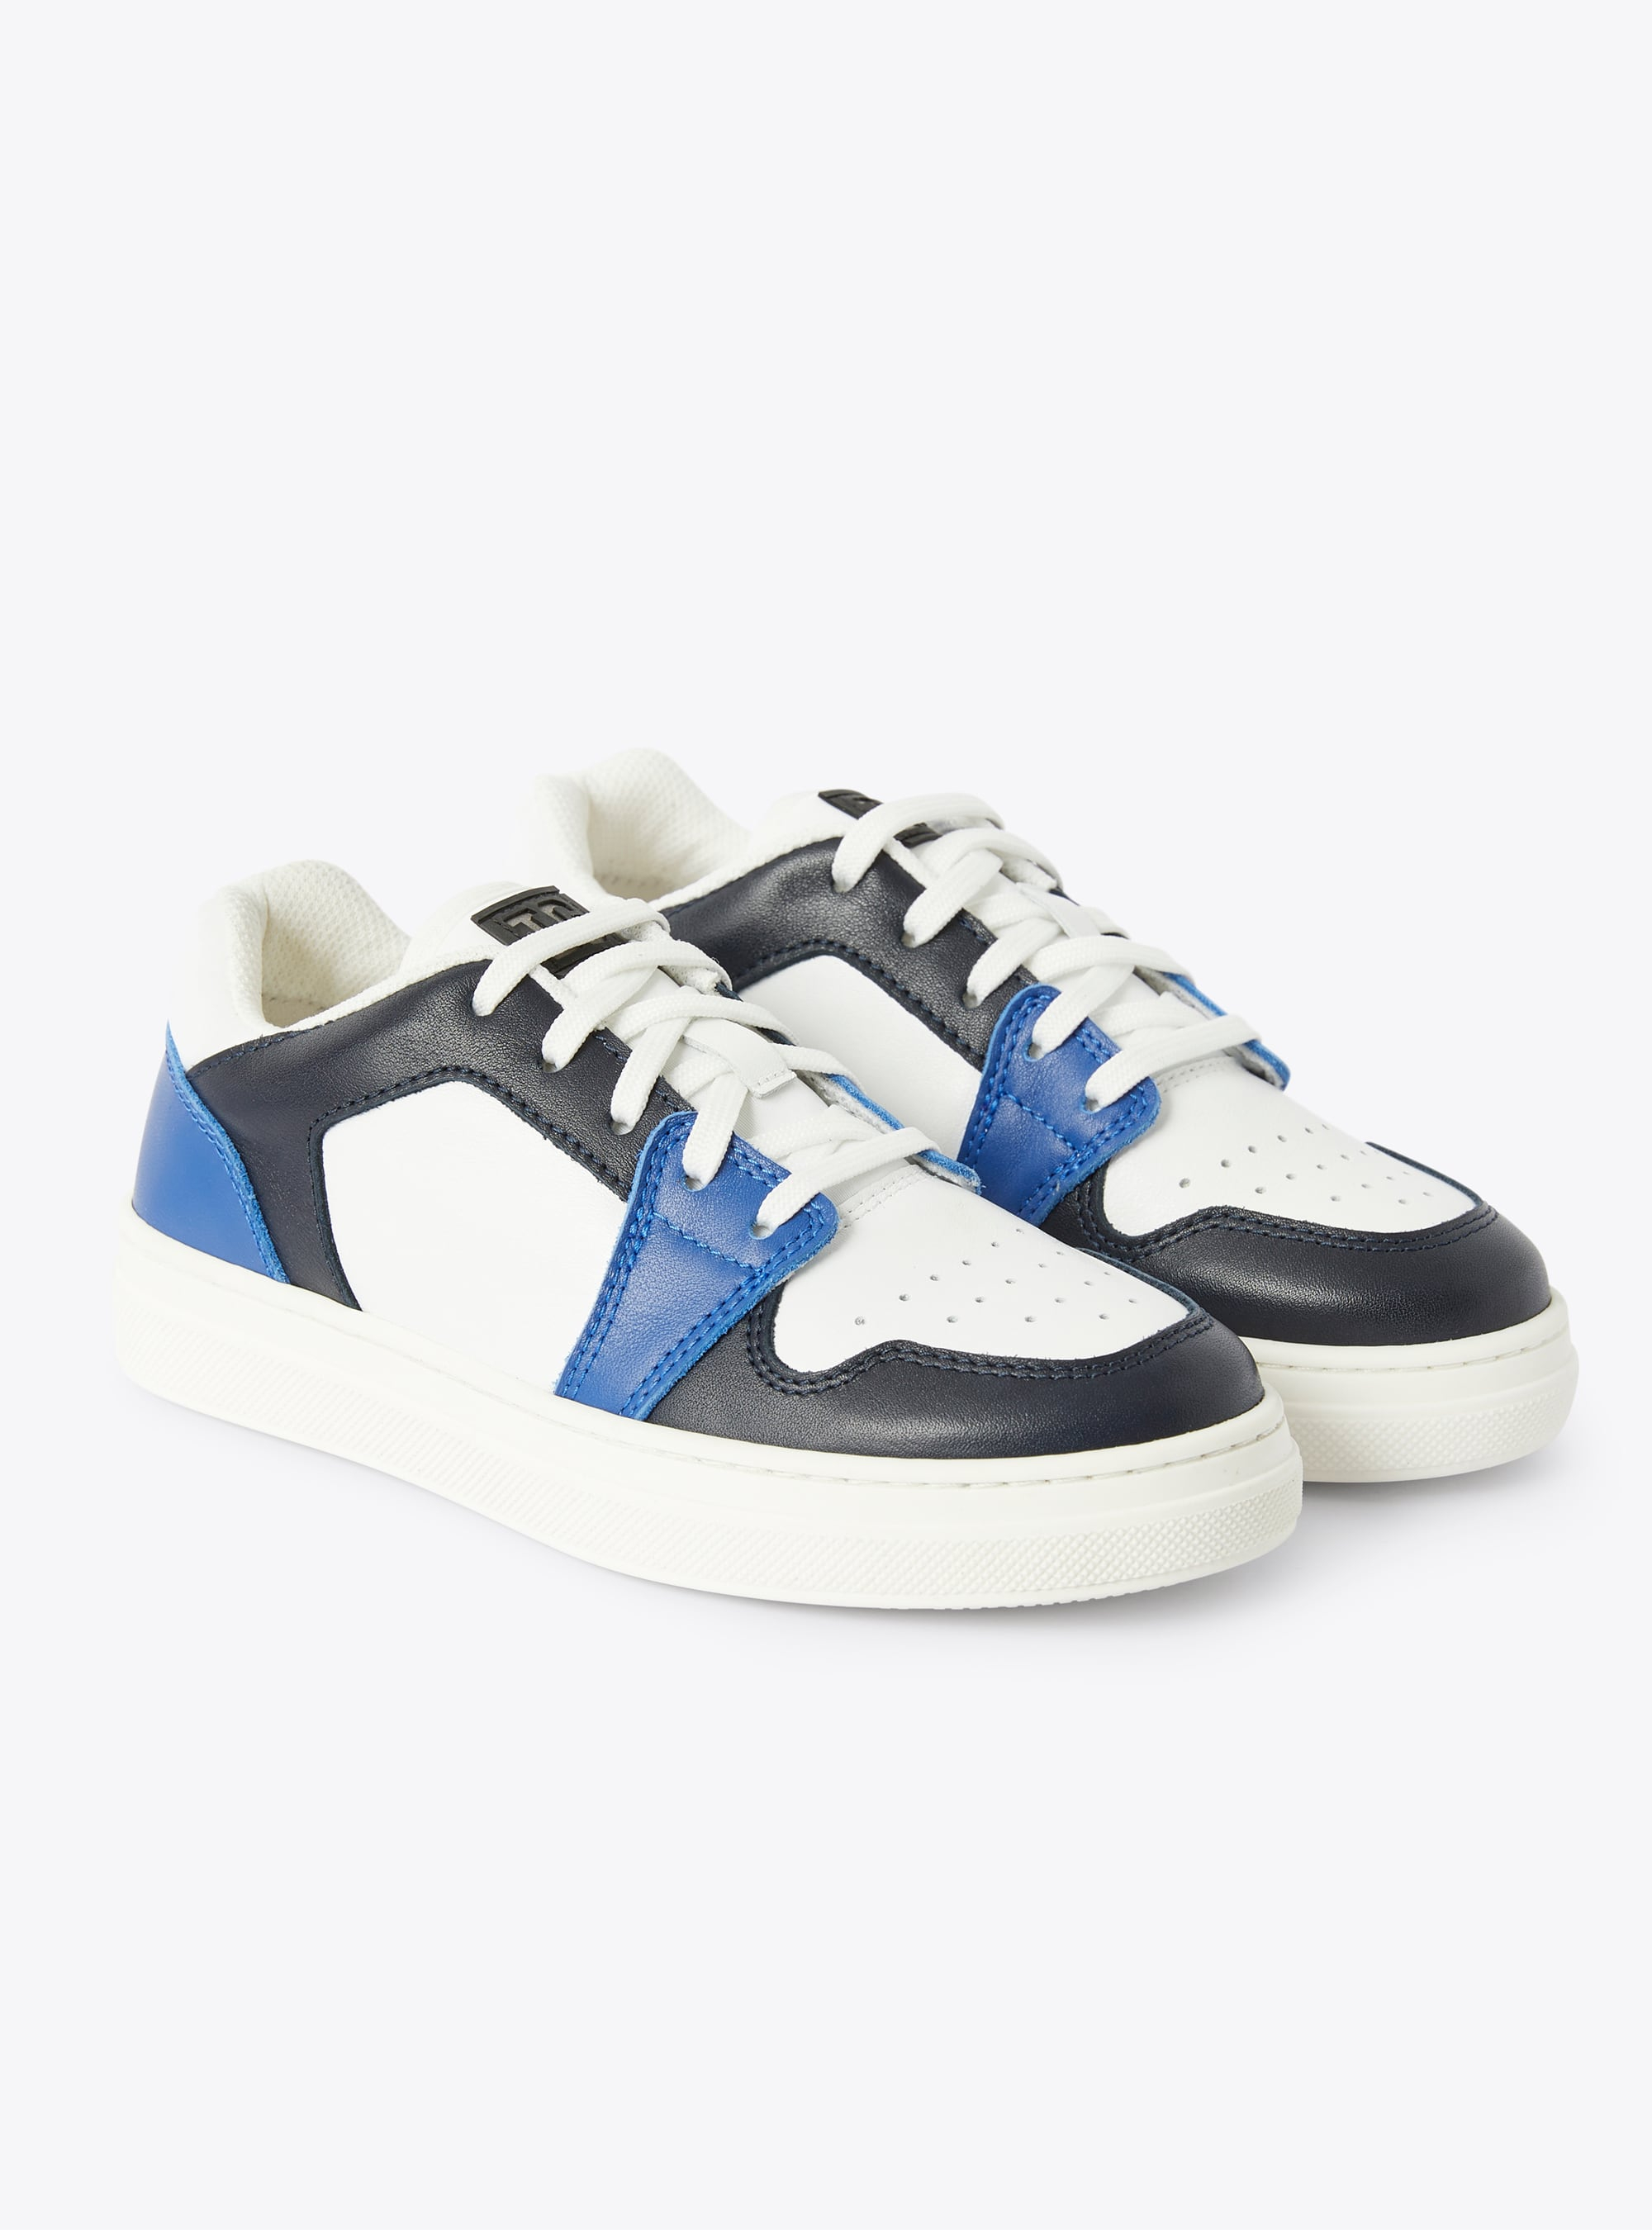 Sneakers basses IG bicolores cobalt et bleu - Chaussures - Il Gufo